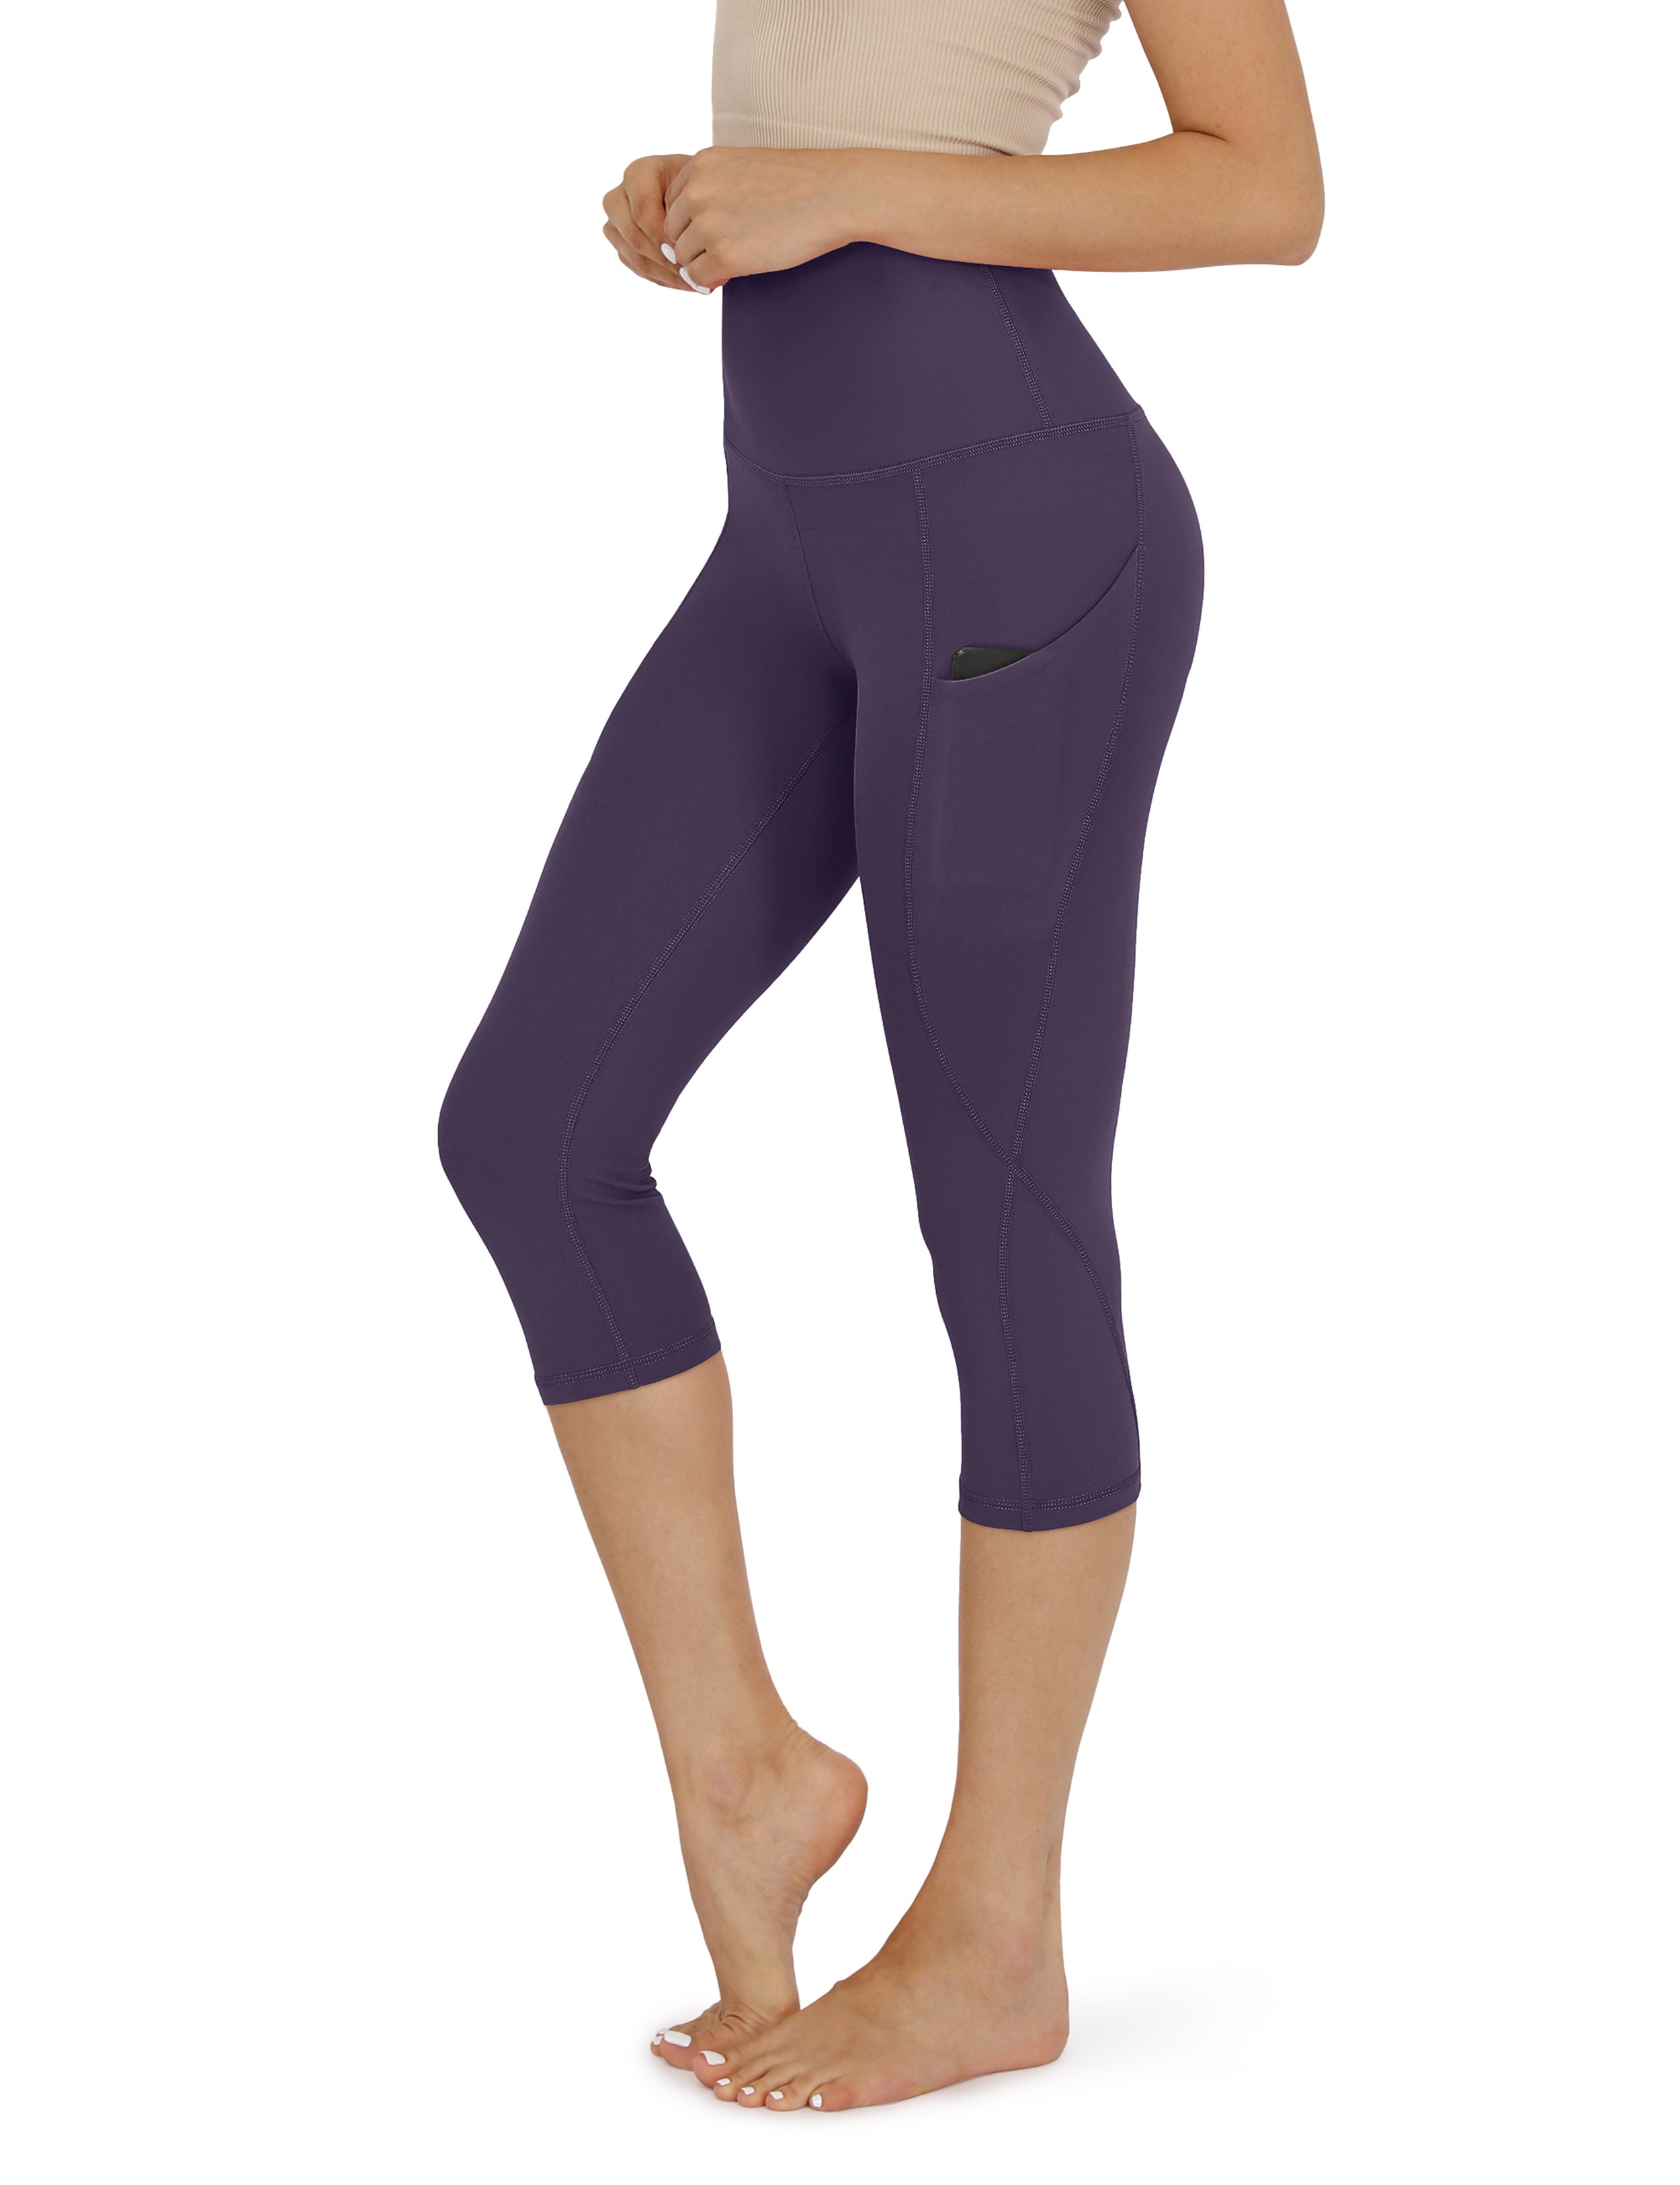 19" High Waist Yoga Capris with Pockets Dark Purple - ododos